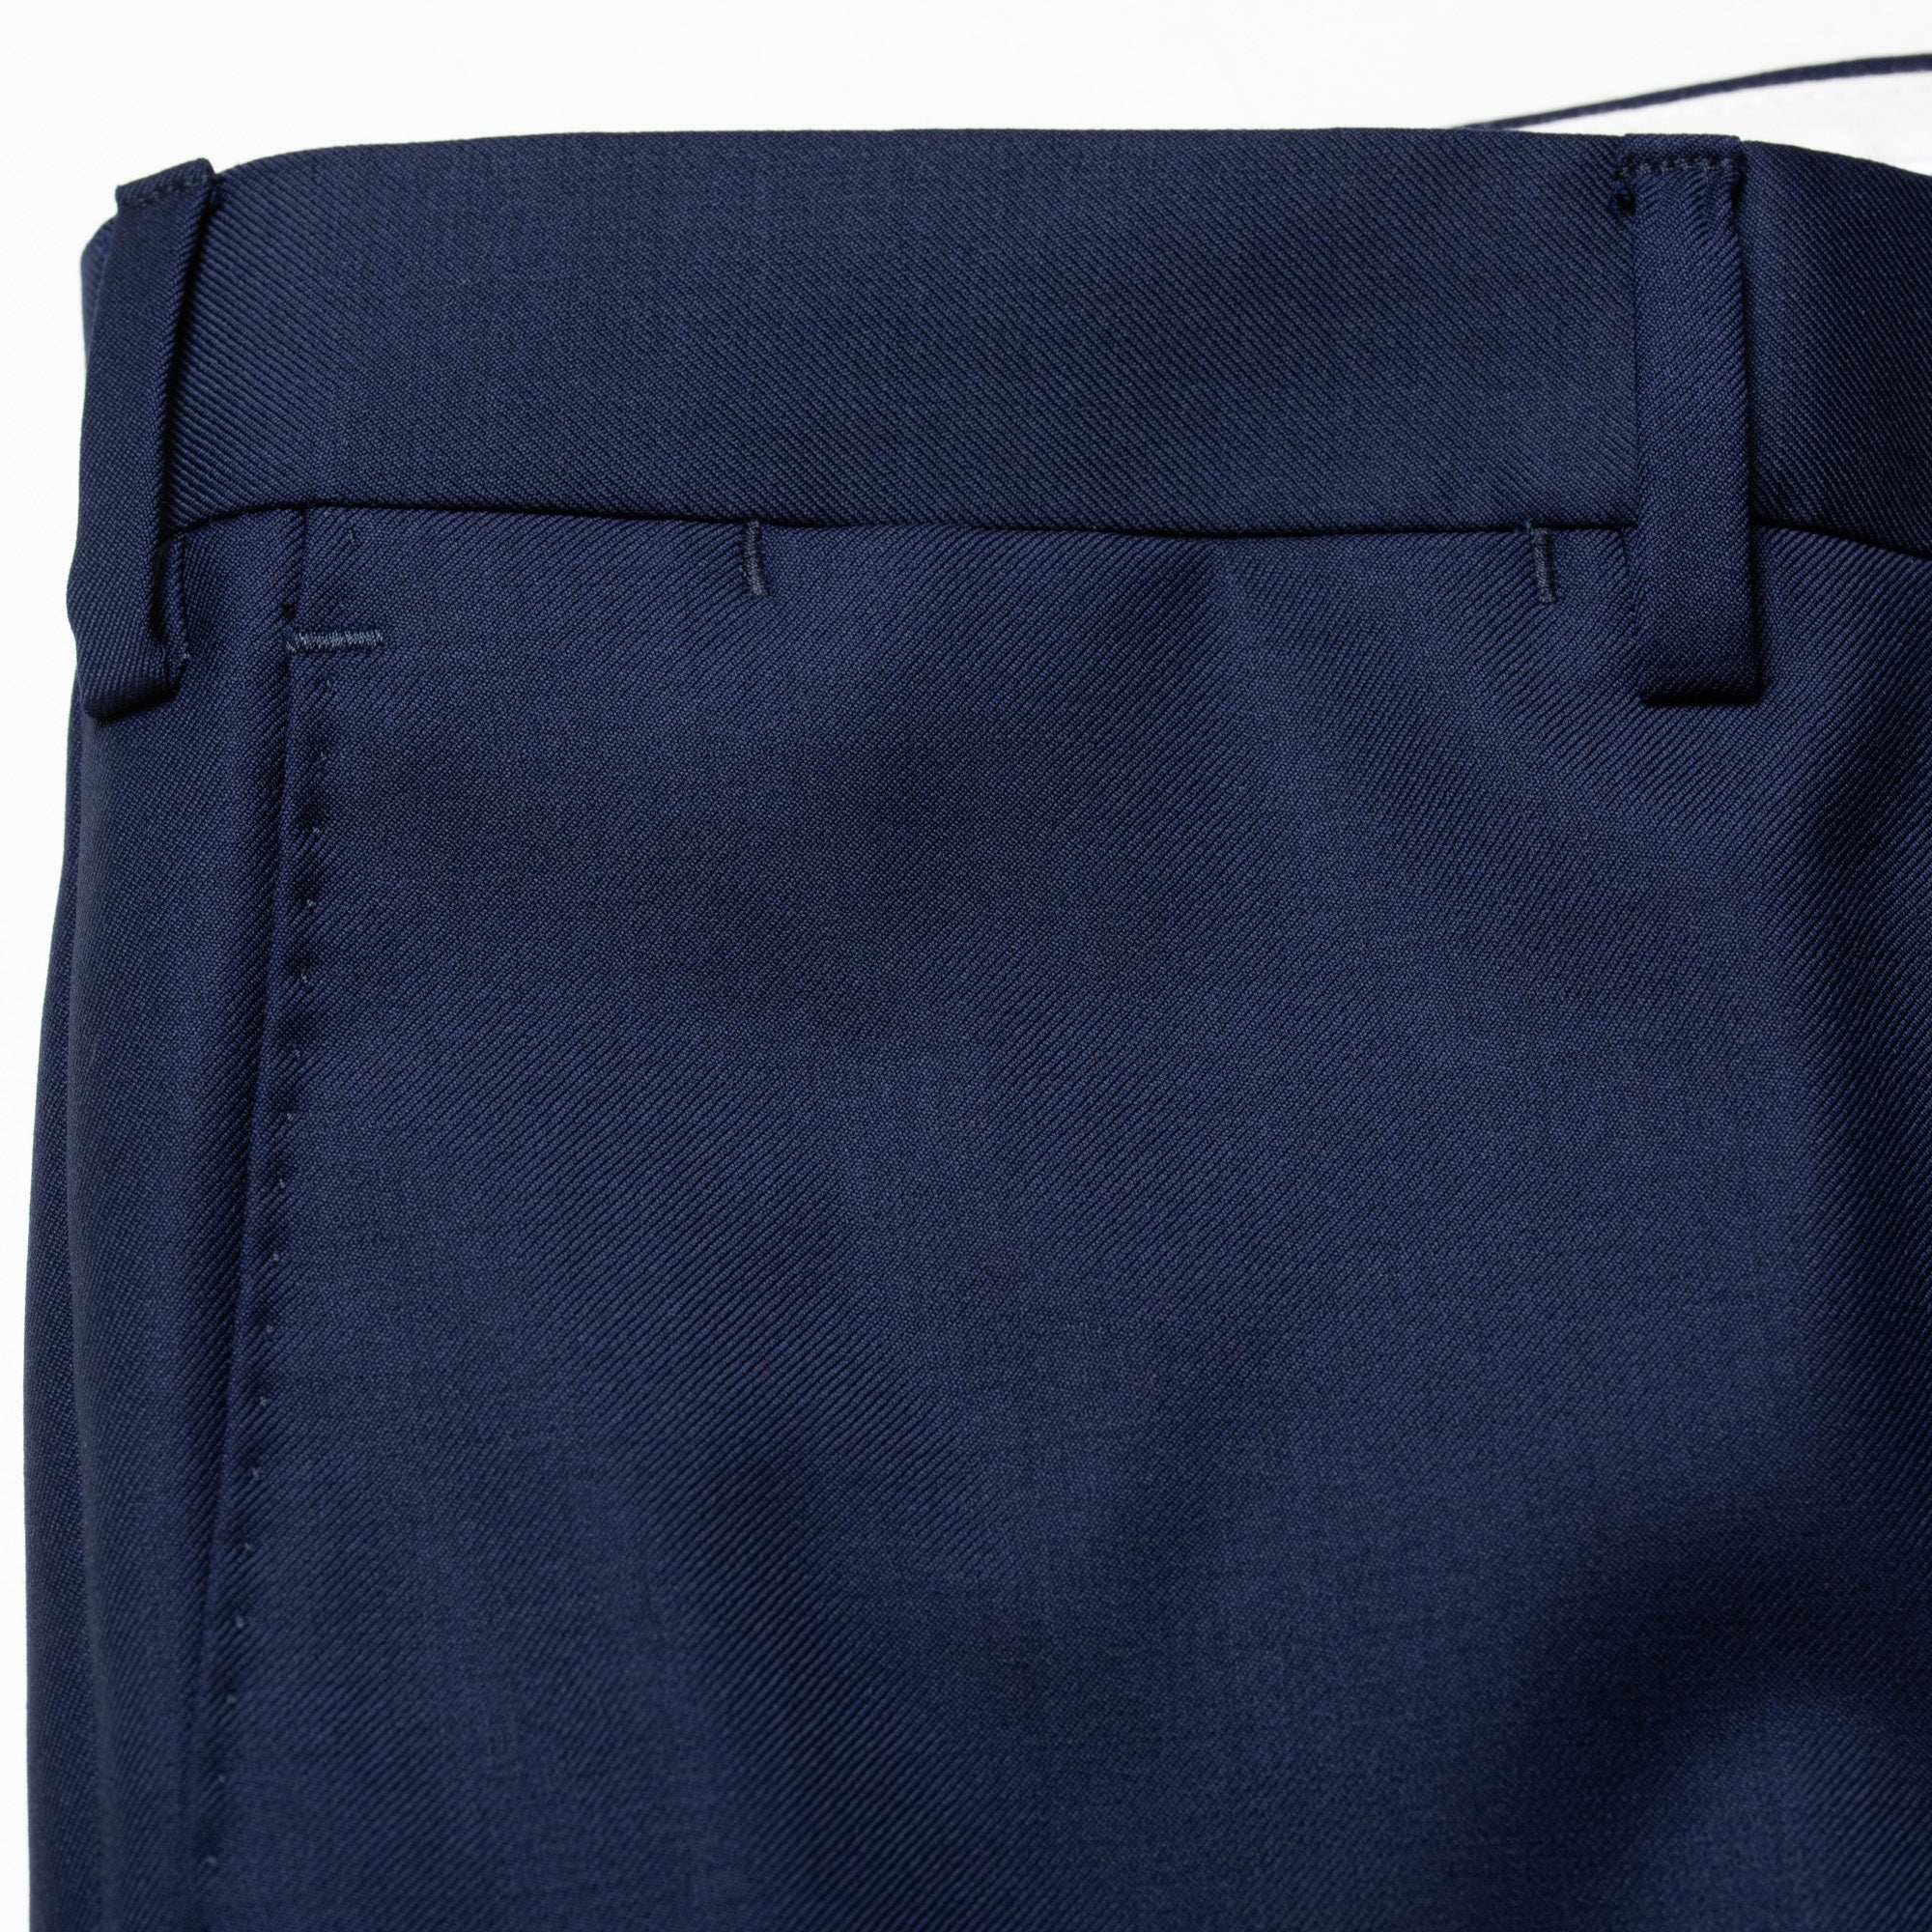 LUIGI BORRELLI Napoli Navy Blue Twill Wool Flat Front Dress Pants NEW Slim Fit LUIGI BORRELLI